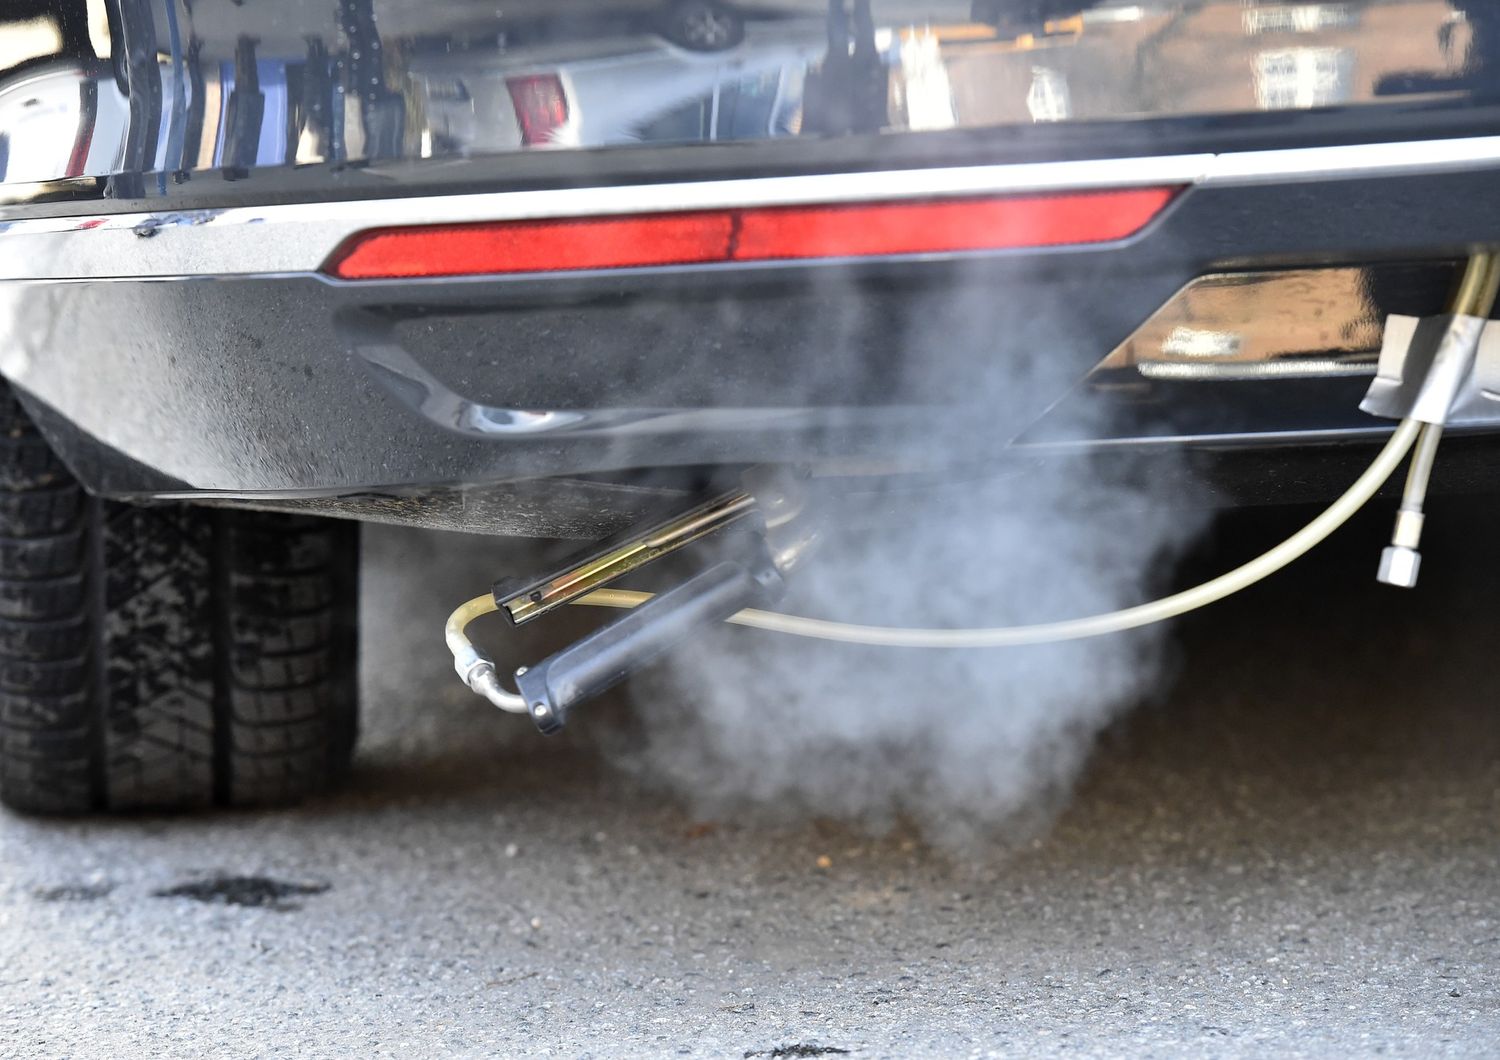 &nbsp;Un test sulle emissioni di una vettura diesel